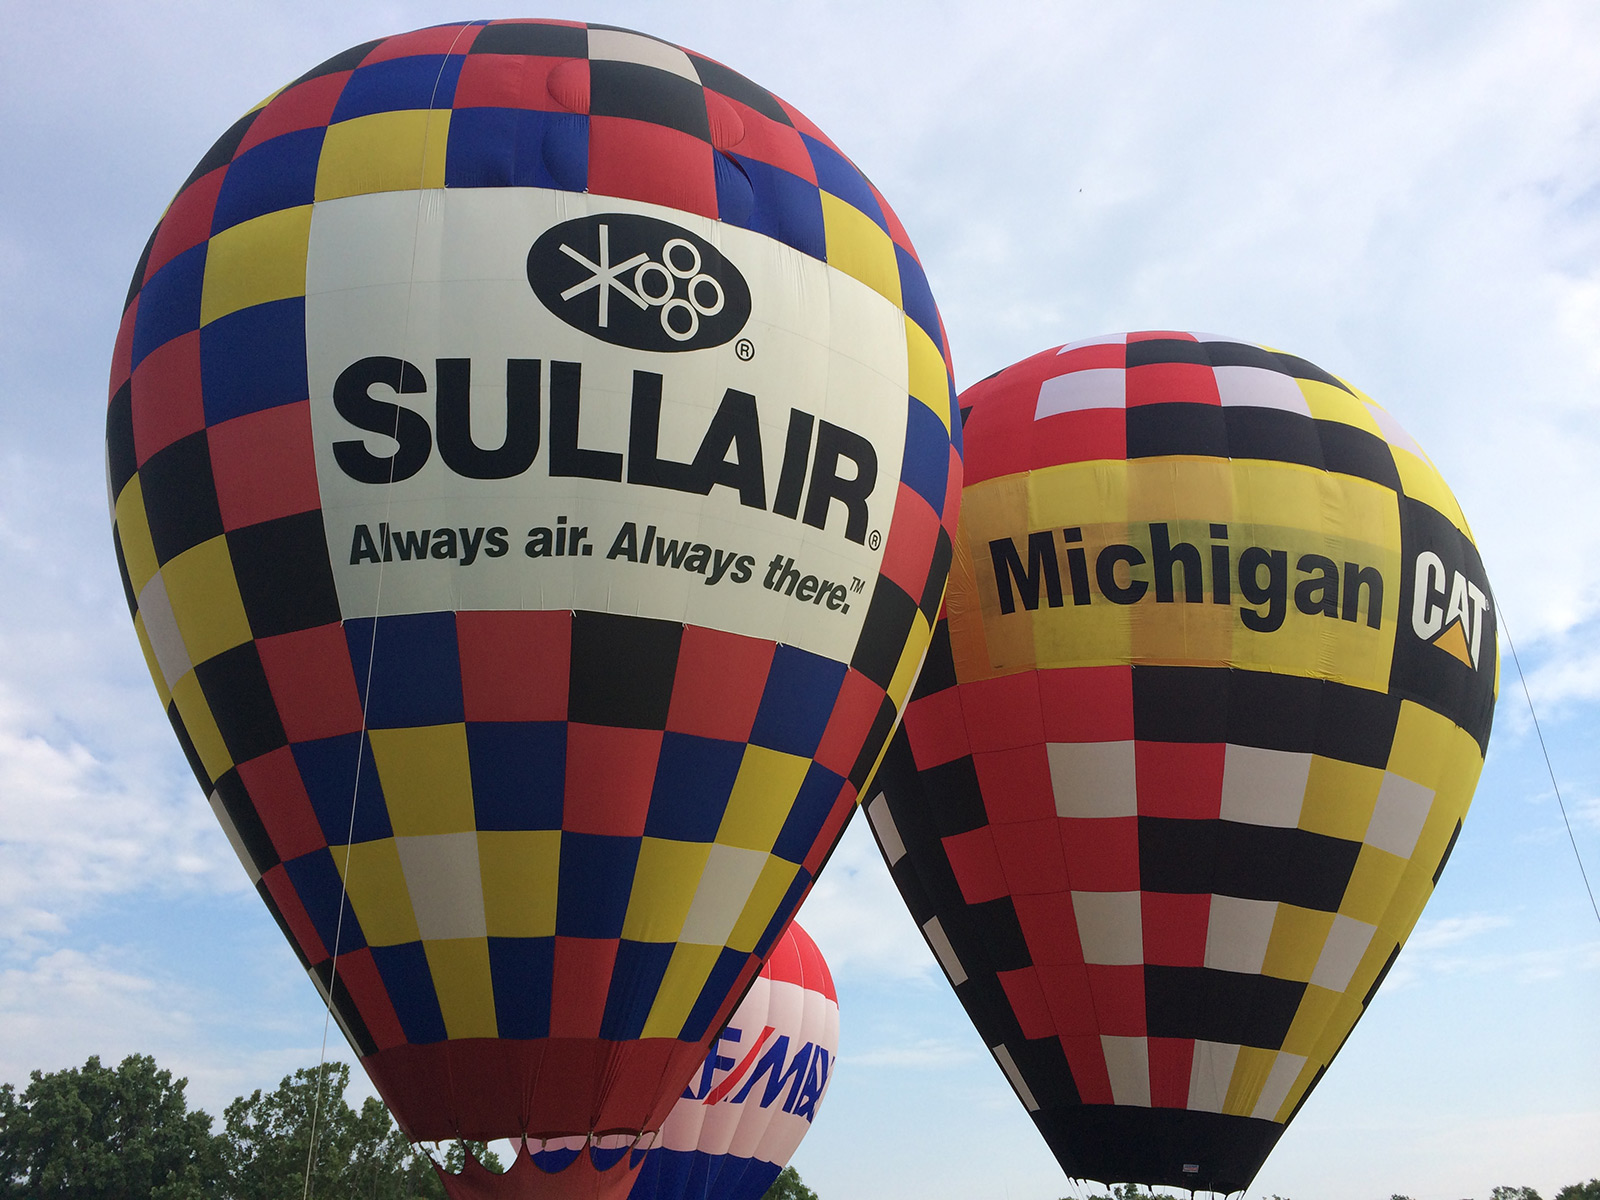 Sullair Balloon at 2014 Michigan Challenge BalloonFest